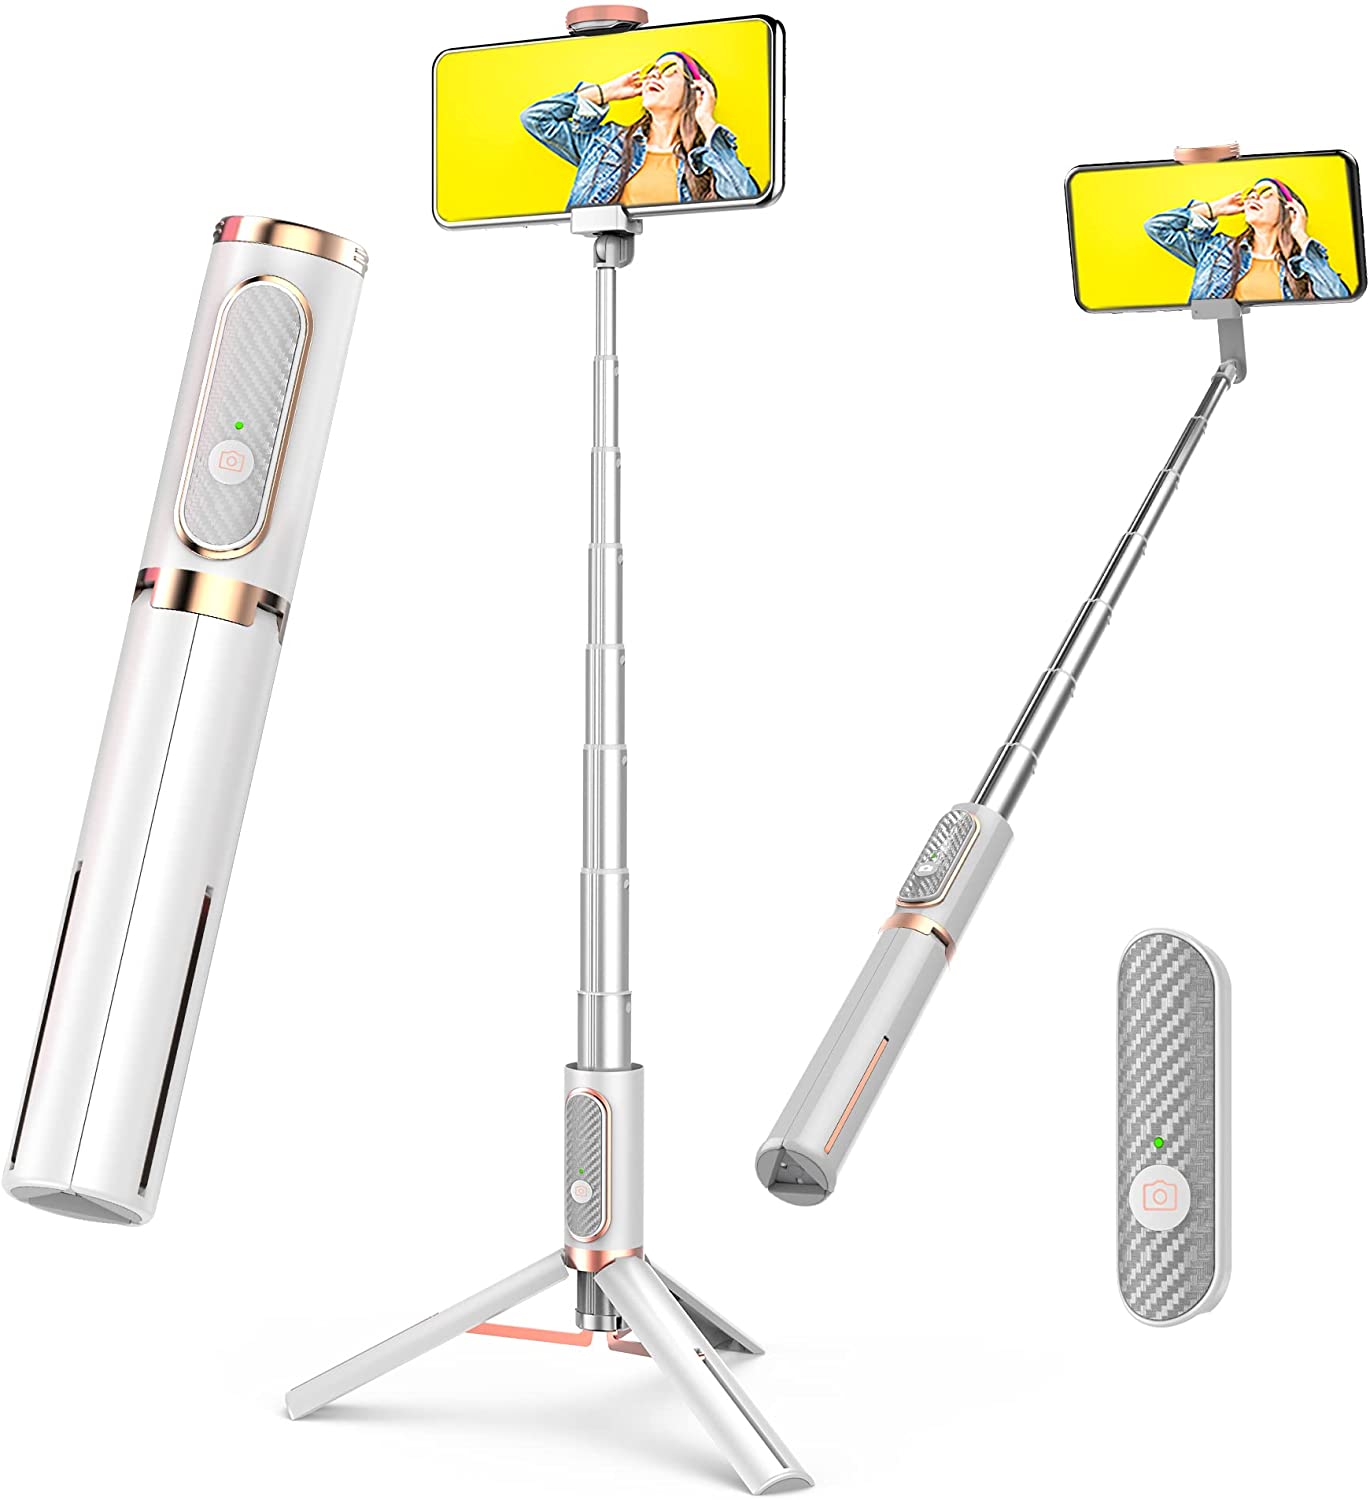 Phonery 3Pod ® 3 in 1 Selfie Stick Tripod-Getphonery